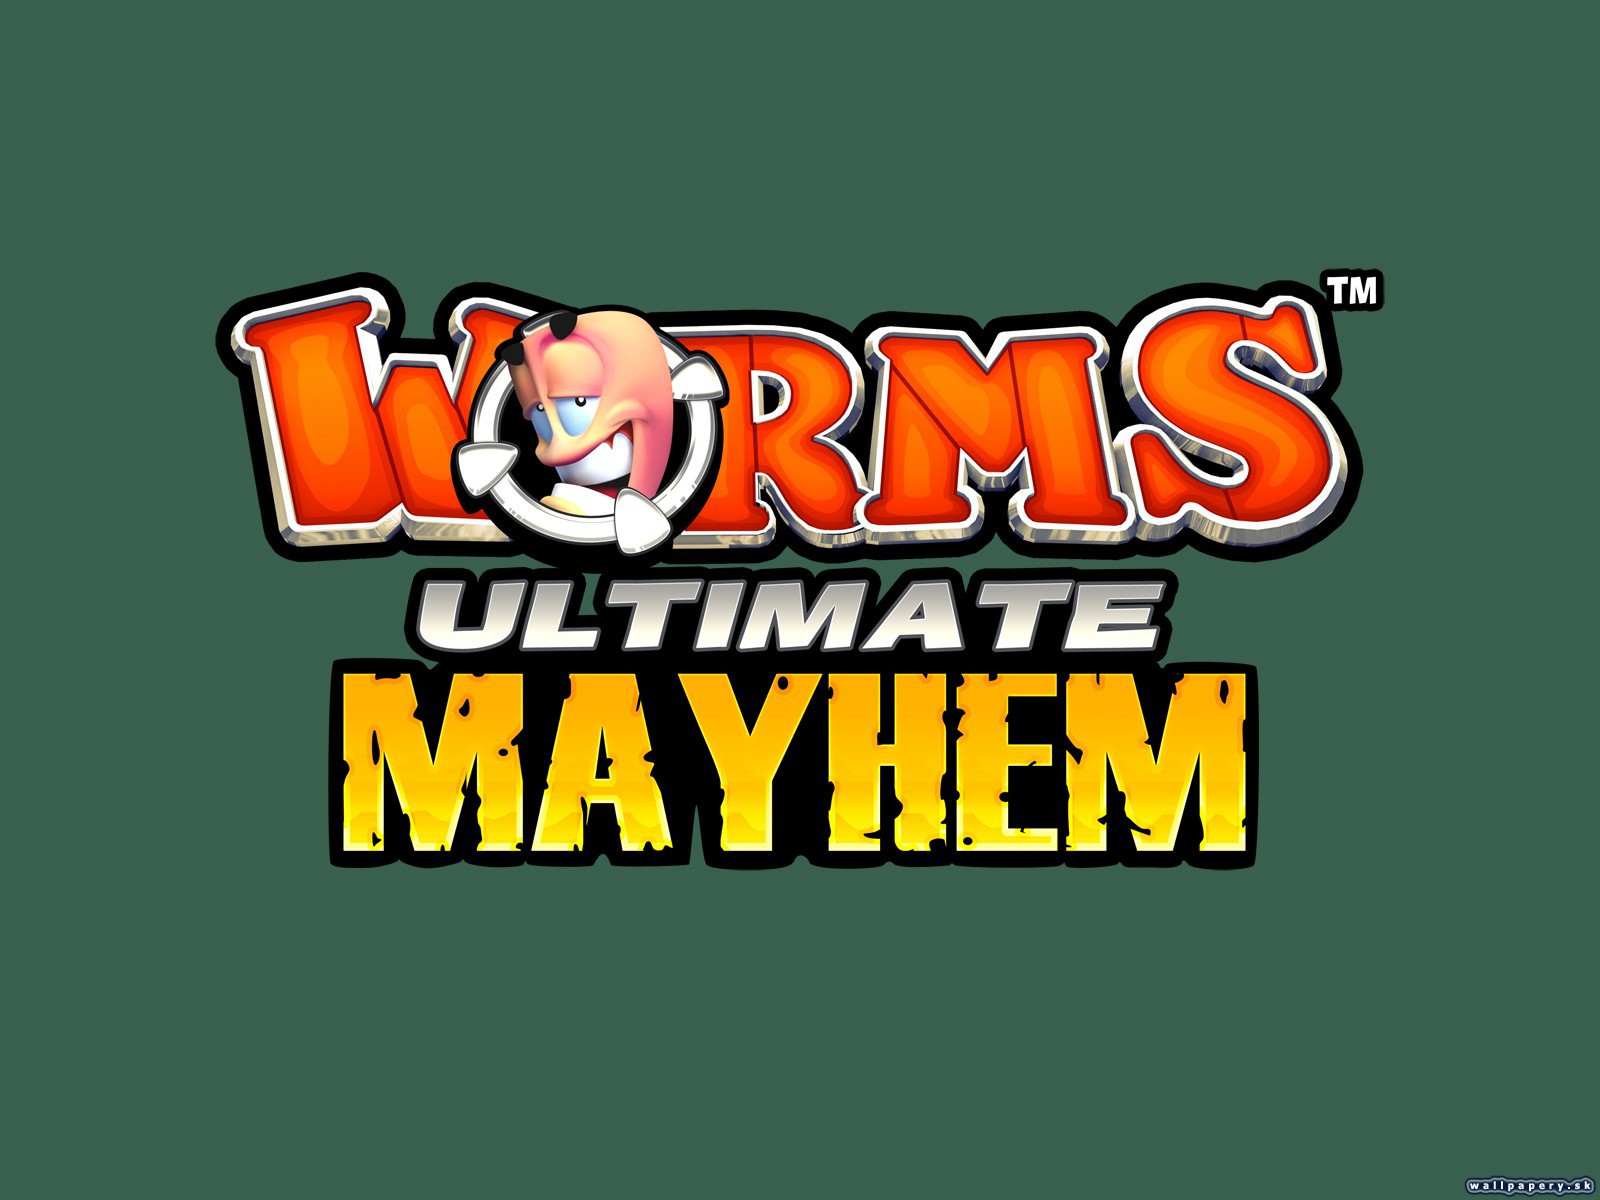 Worms: Ultimate Mayhem